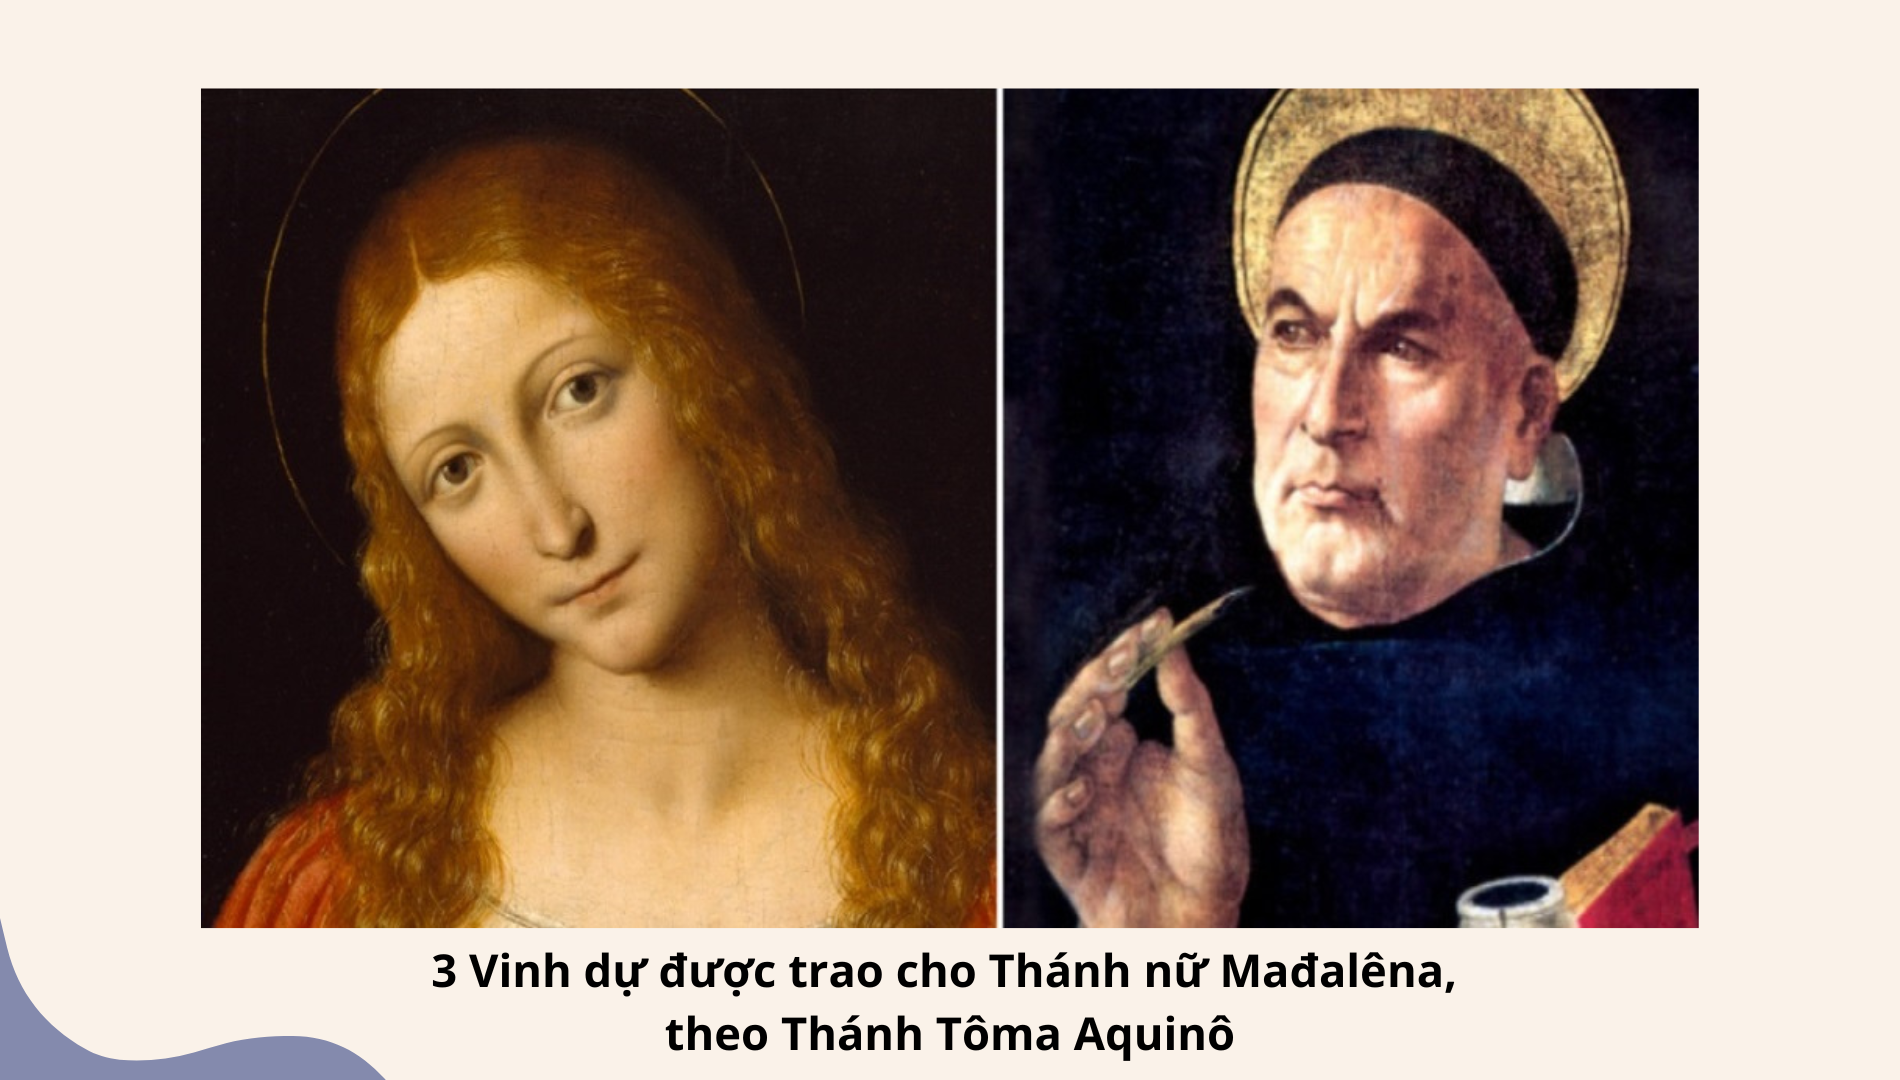 3 vinh du duoc trao cho thanh nu maria madalena theo thanh toma aquino